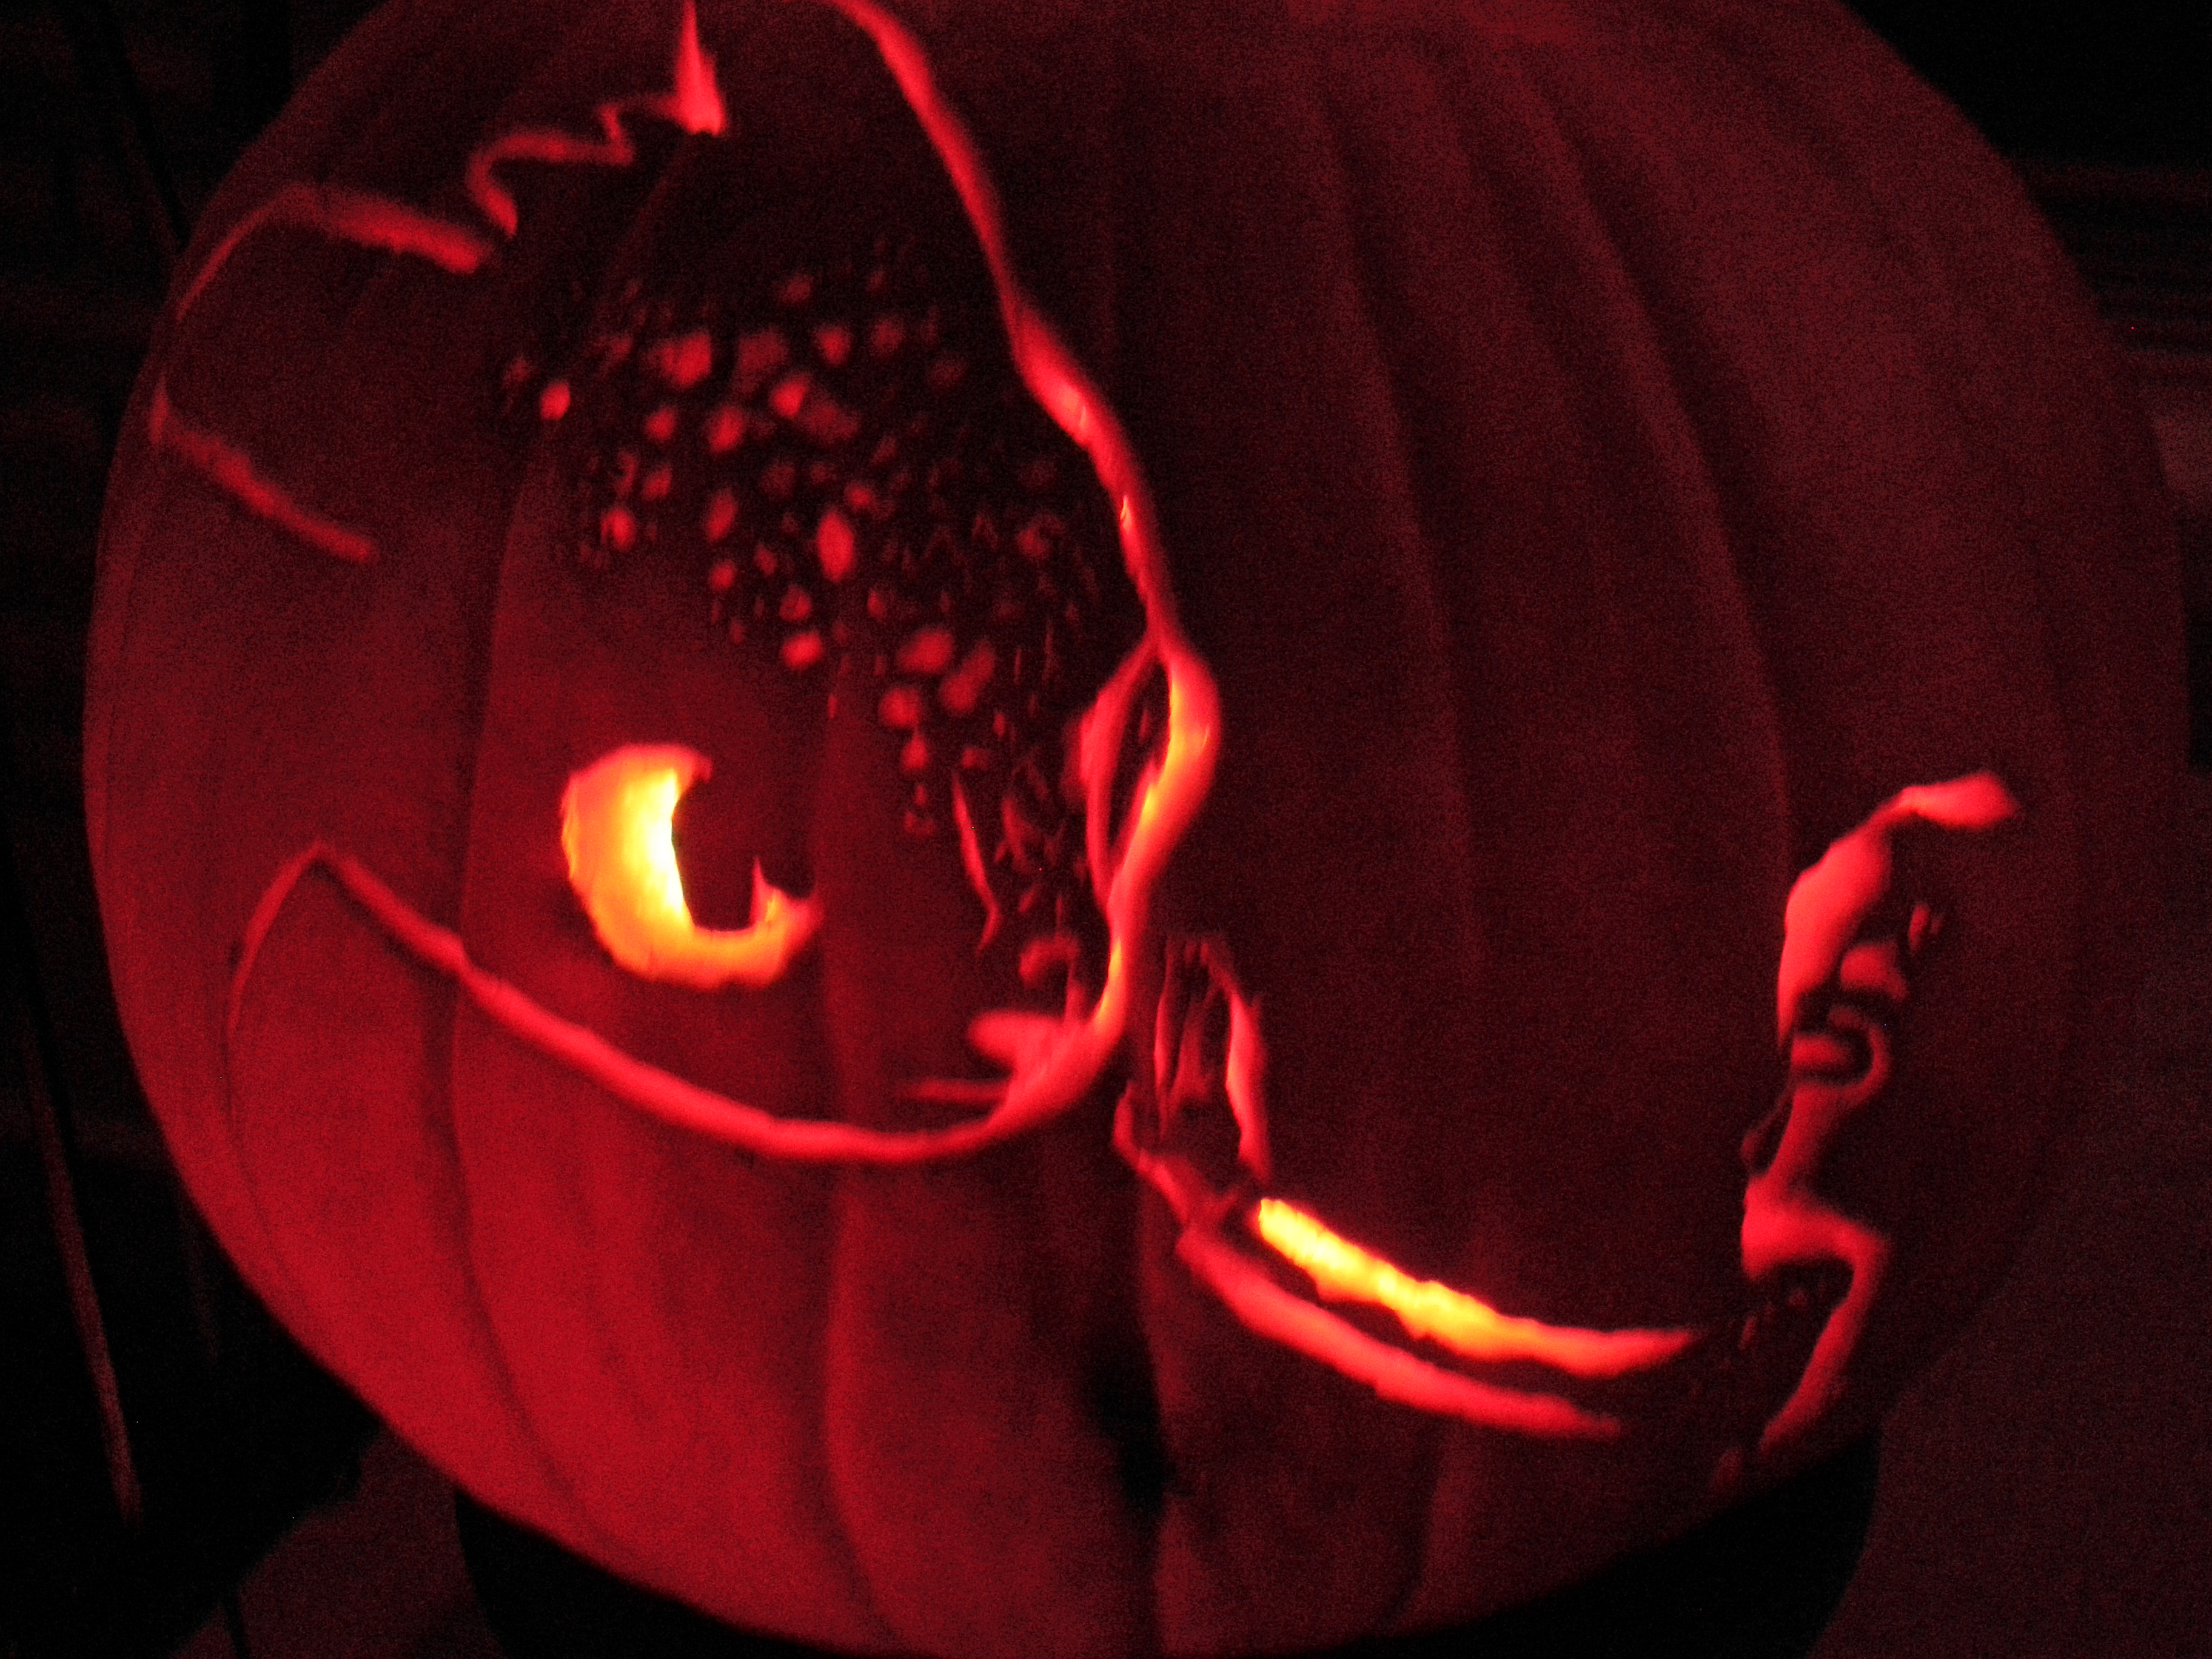 How to train your dragon - Halloween Pumpkin by Julika-Nagara on DeviantArt